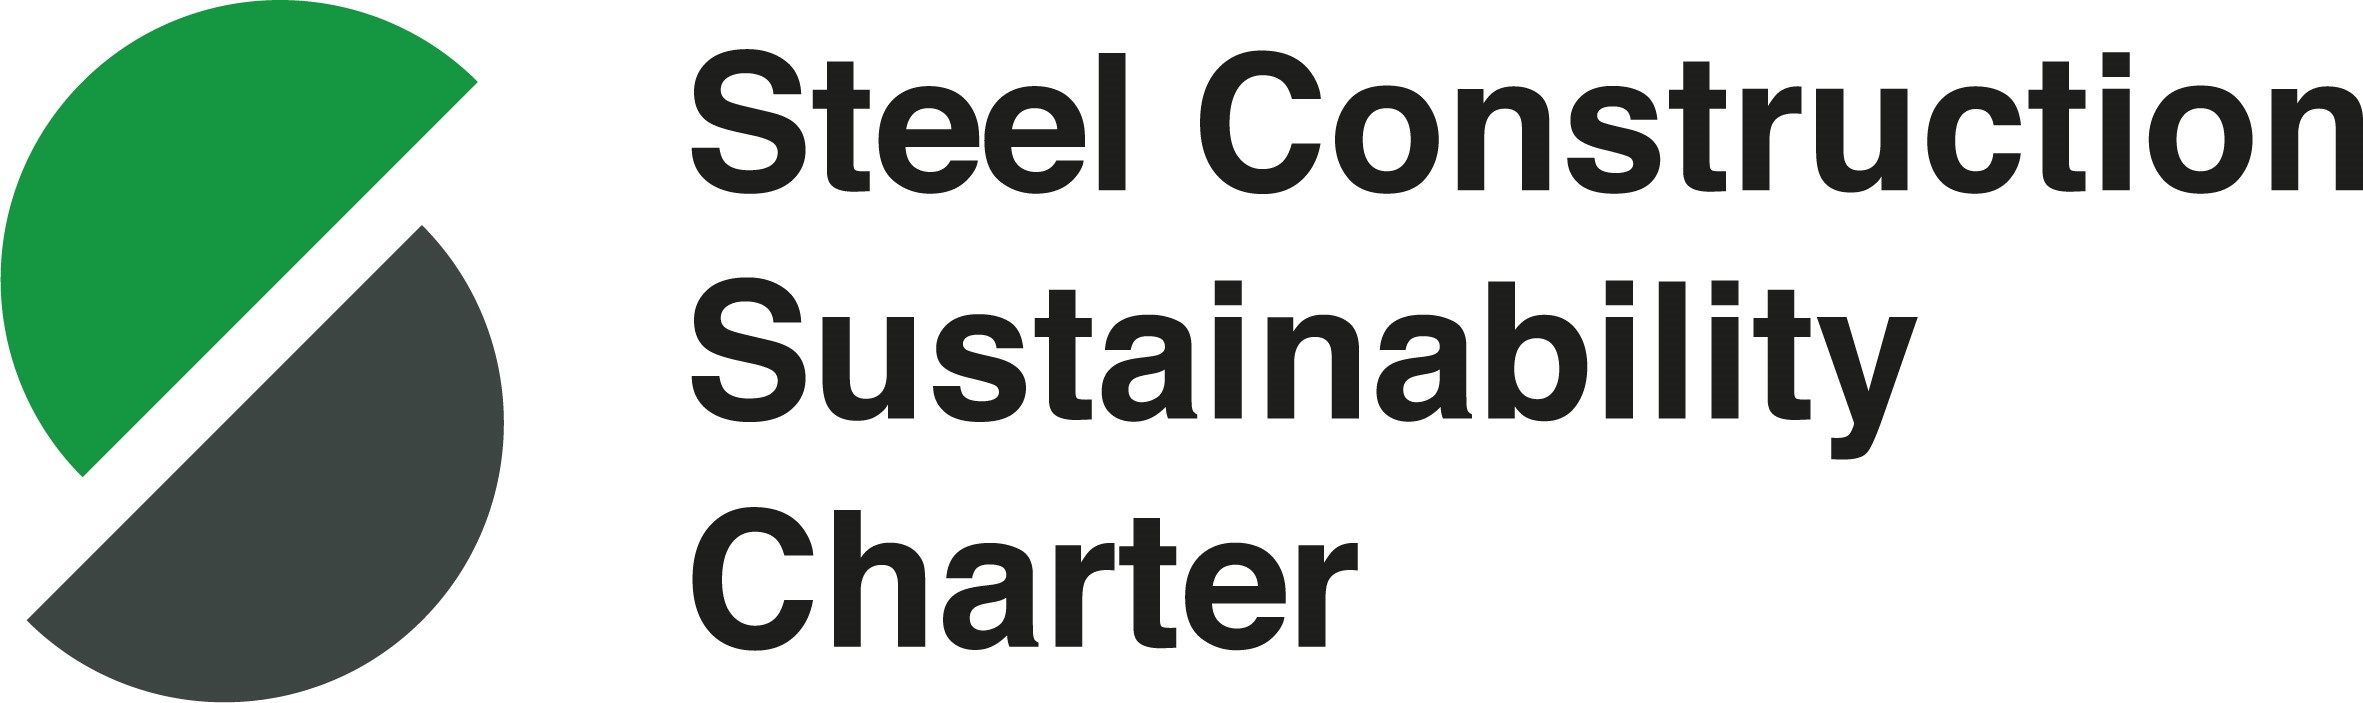 BCSA Steel Construction Sustainability Charter logo SCSC